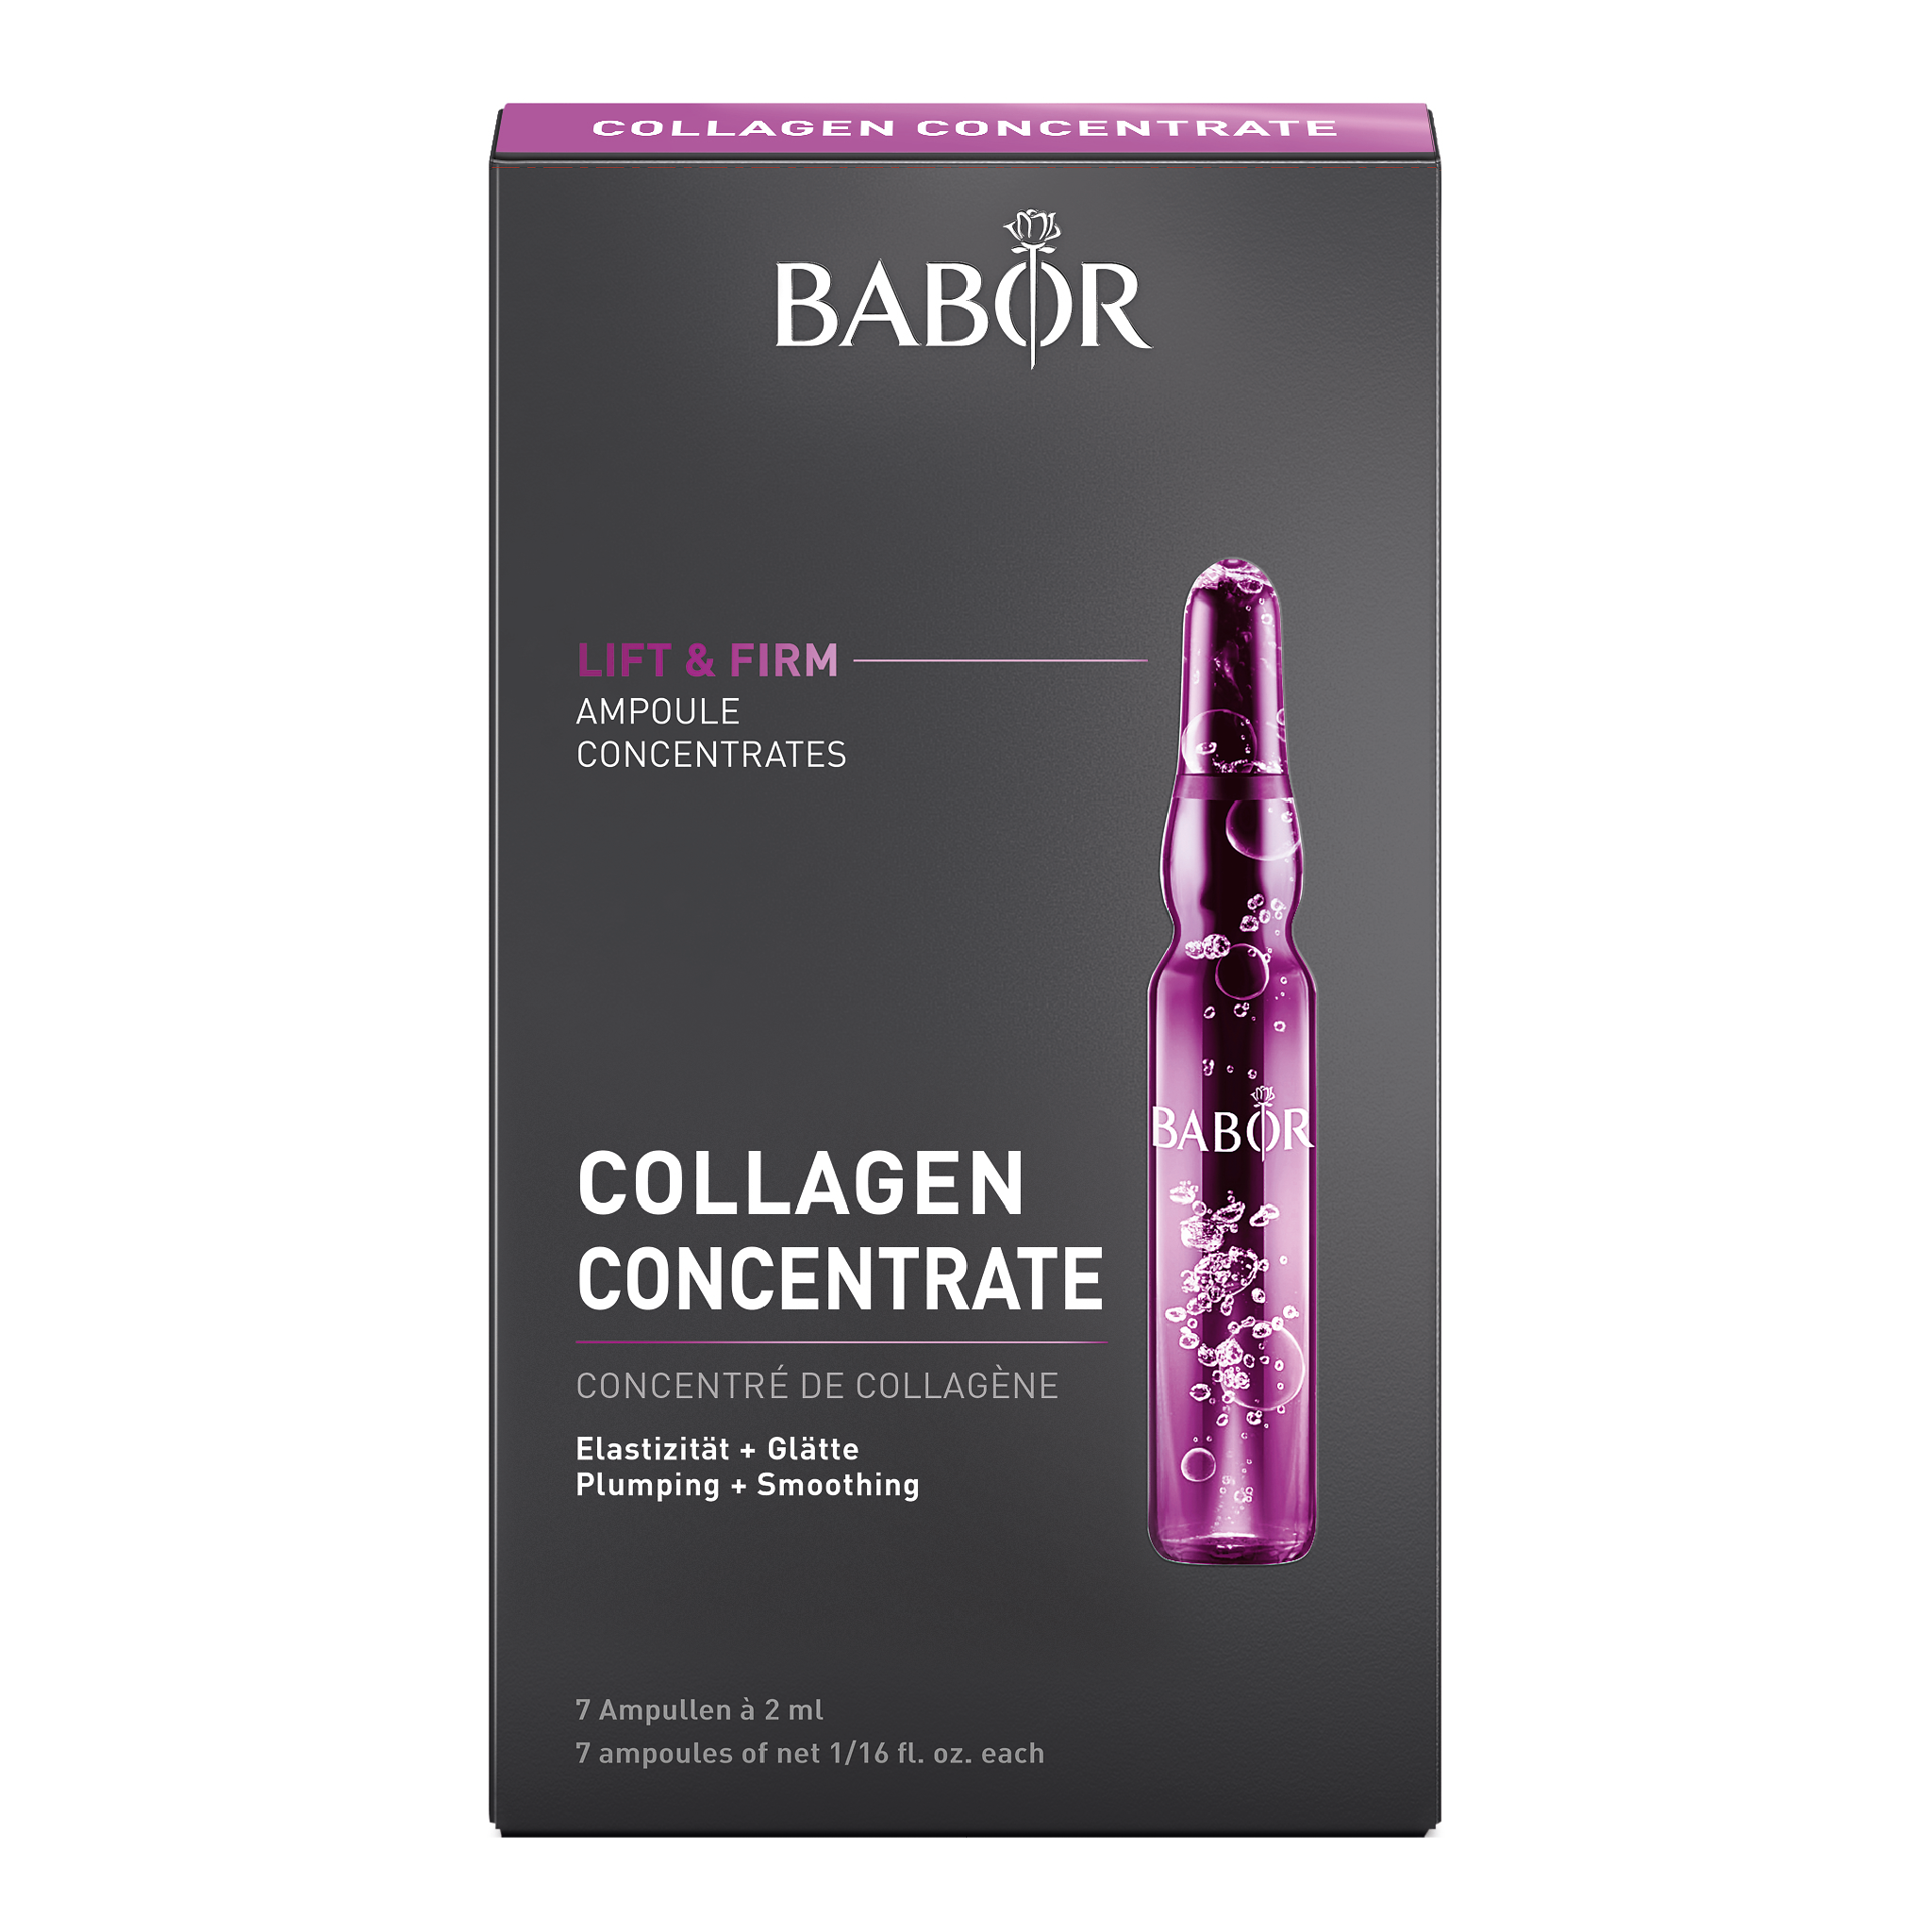 Babor Collagen Concentrate Ampoule Serum Concentrates Size 7x2mL